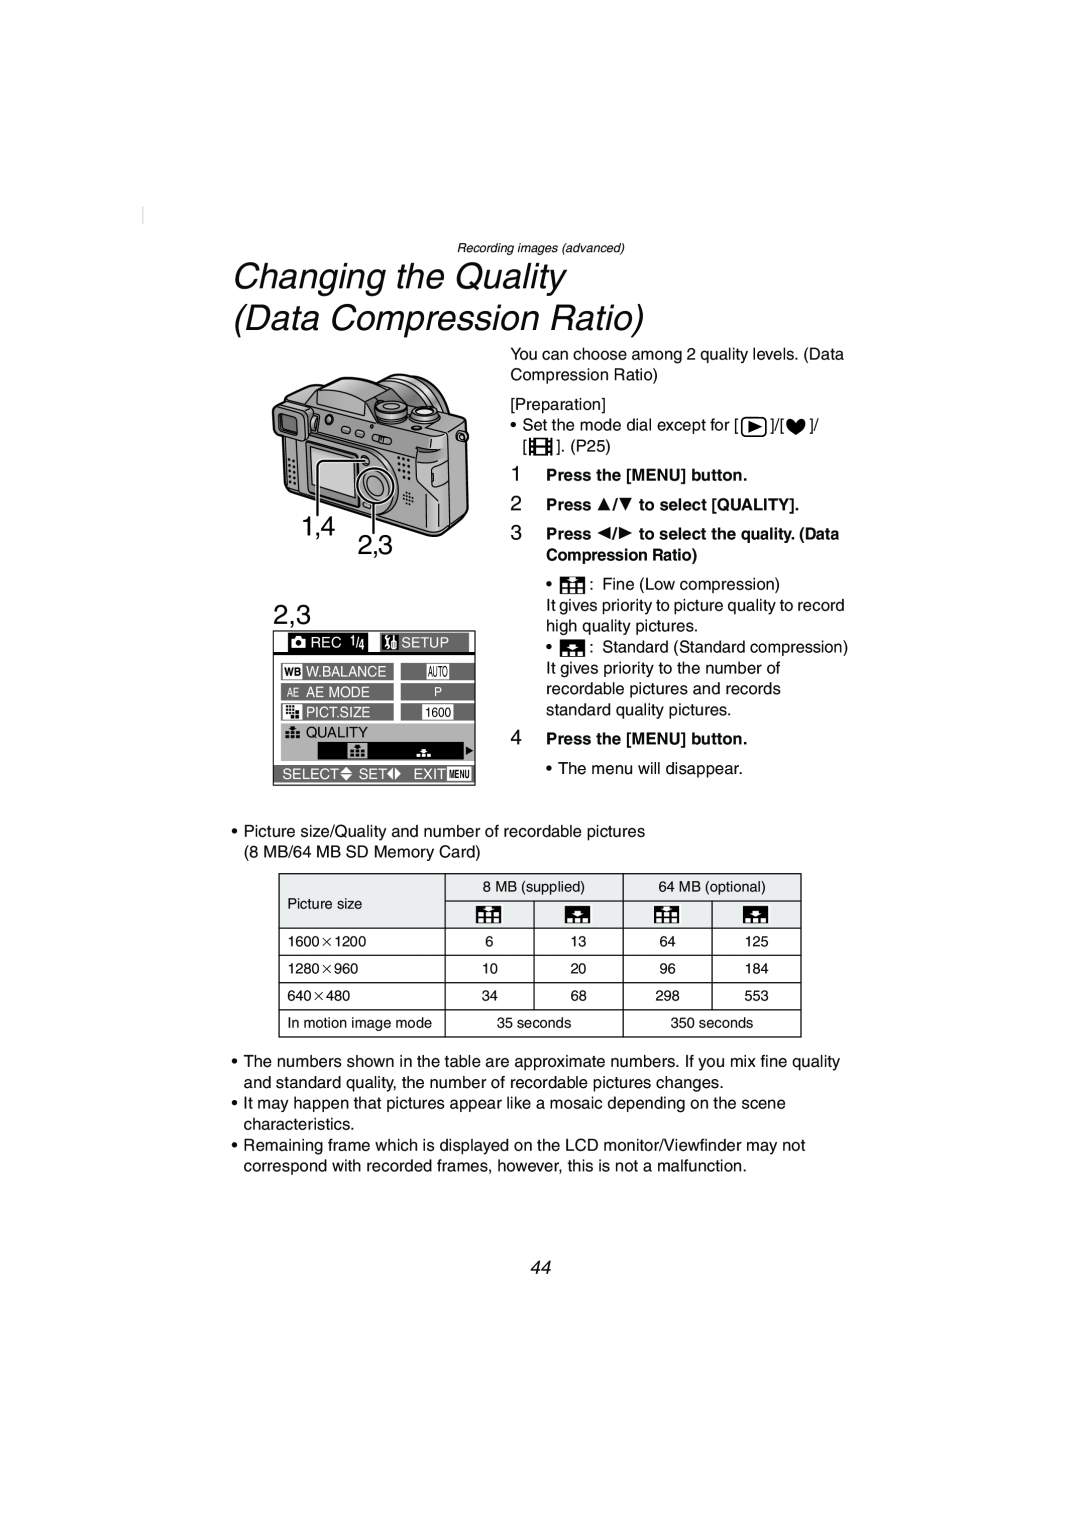 Panasonic DMC-FZ2PP Changing the Quality Data Compression Ratio, Press the MENU button 2 Press 3/4 to select QUALITY 